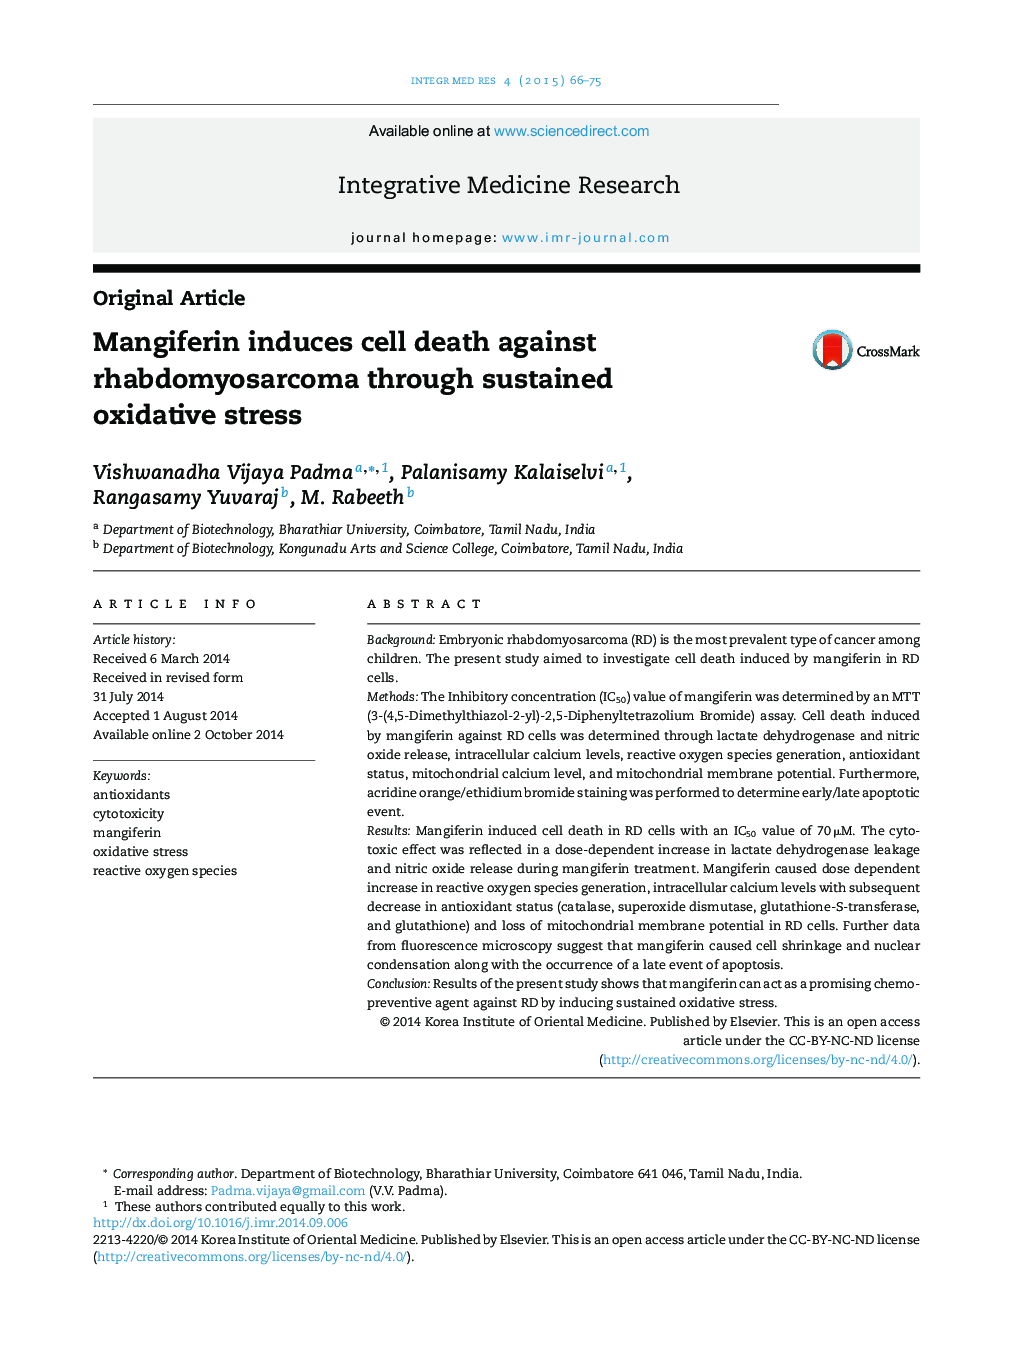 Mangiferin induces cell death against rhabdomyosarcoma through sustained oxidative stress